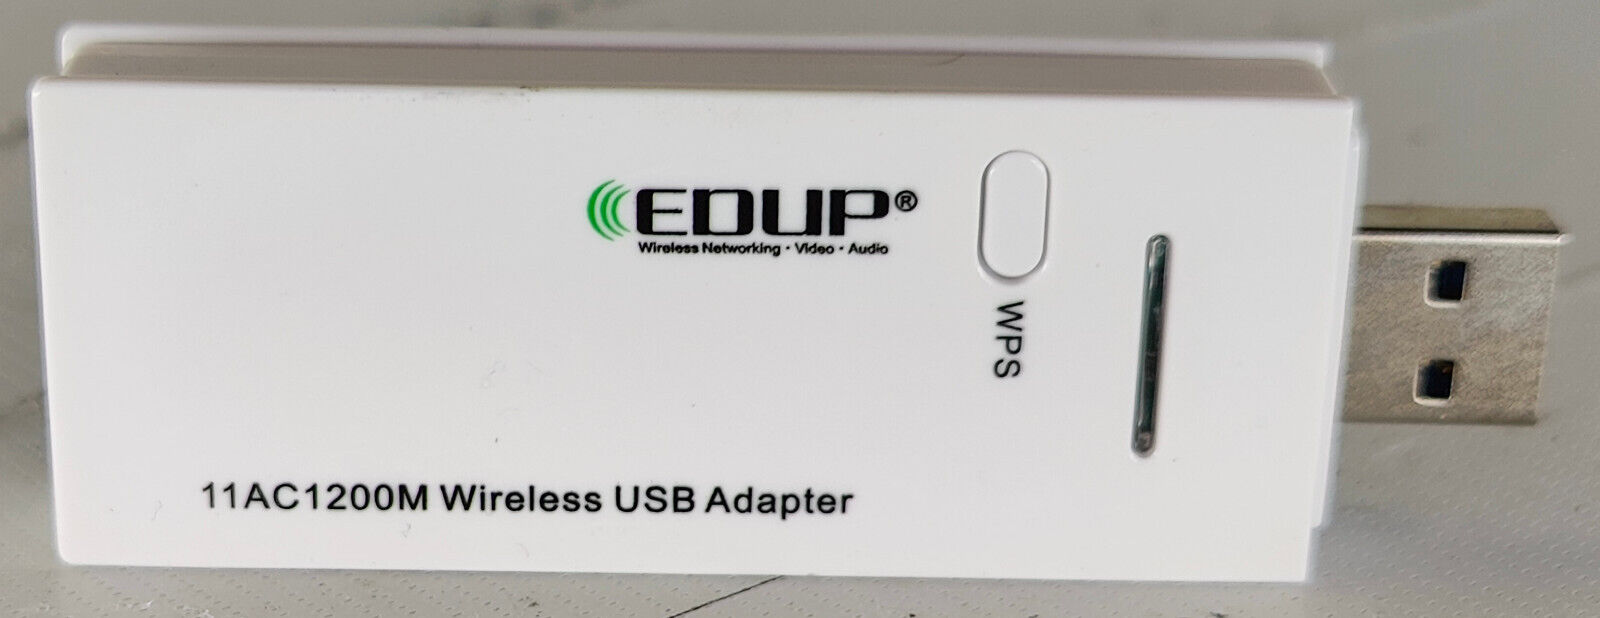 EDUP Wireless Networking Video Audio 11AC1200M Wireless USB Adapter EP-AC1602